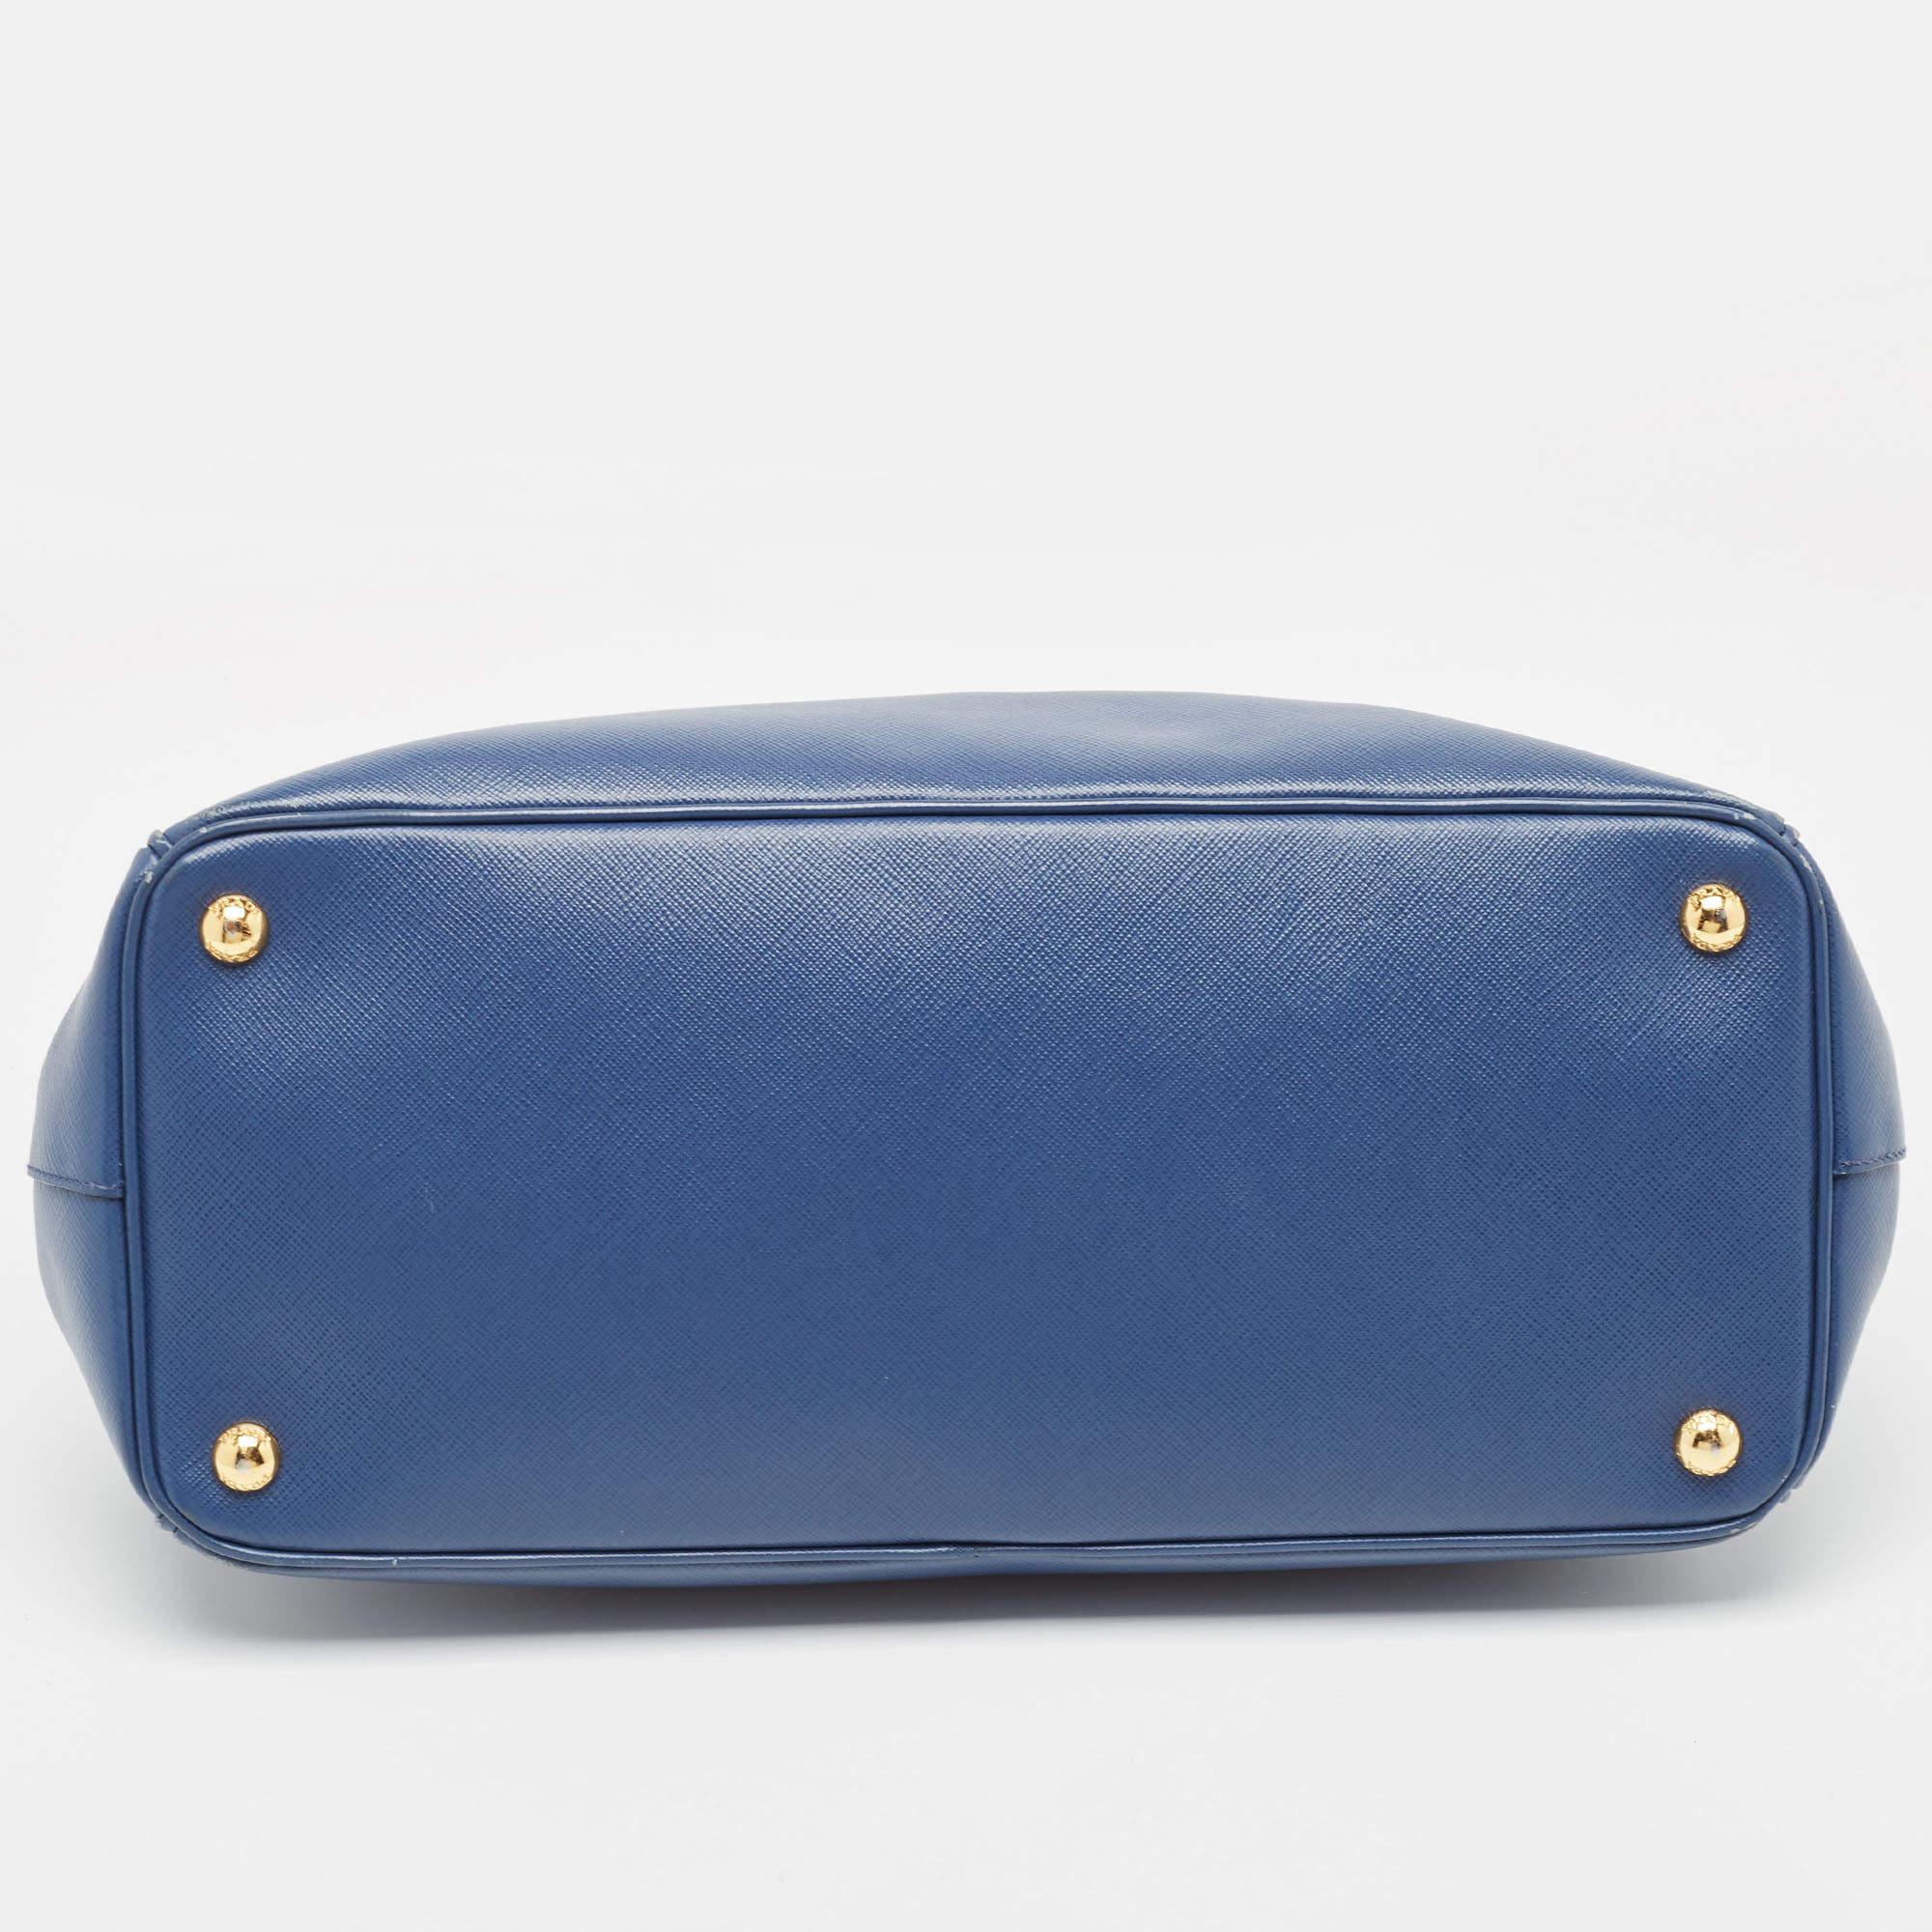 Prada Navy Blue Saffiano Leather Medium Galleria Double Zip Tote For Sale 3